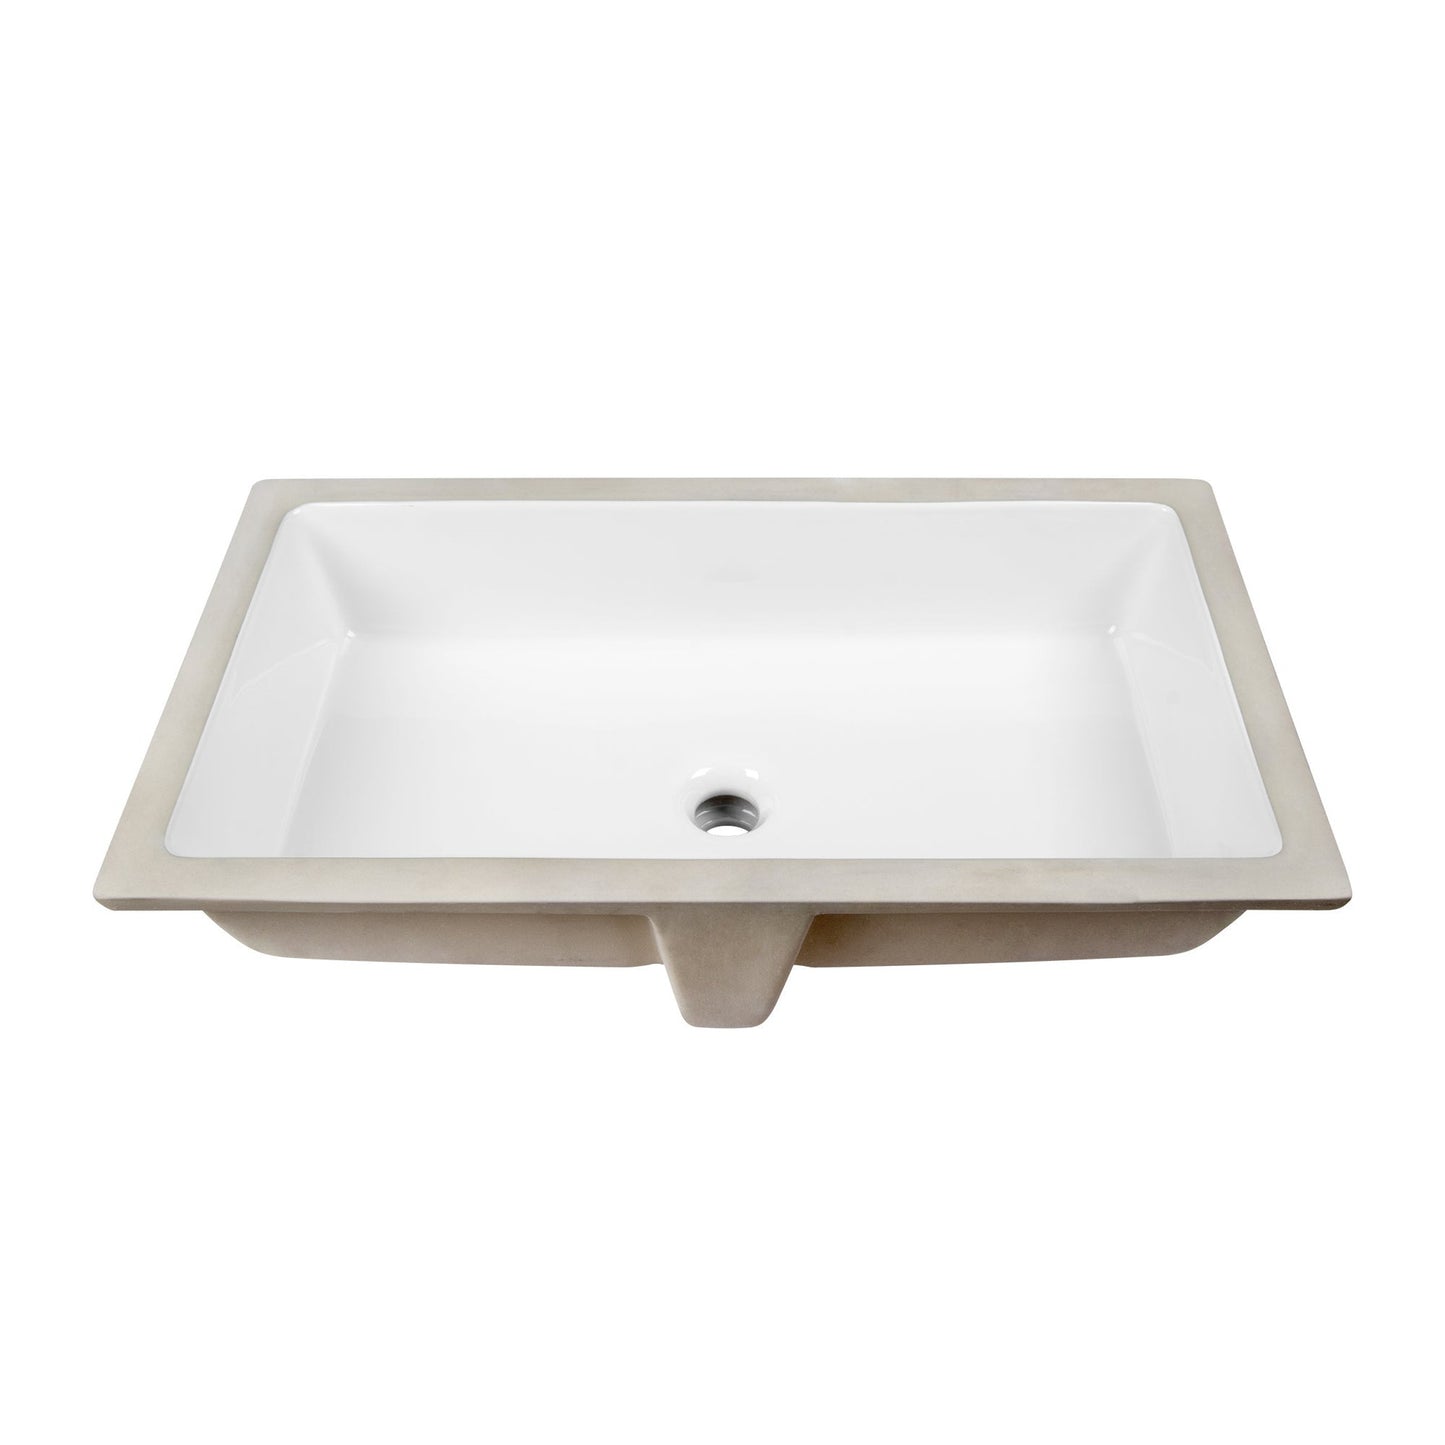 DeerValley 28" x 16" Rectangular White Ceramic Undermount Bathroom Sink With Overflow Hole